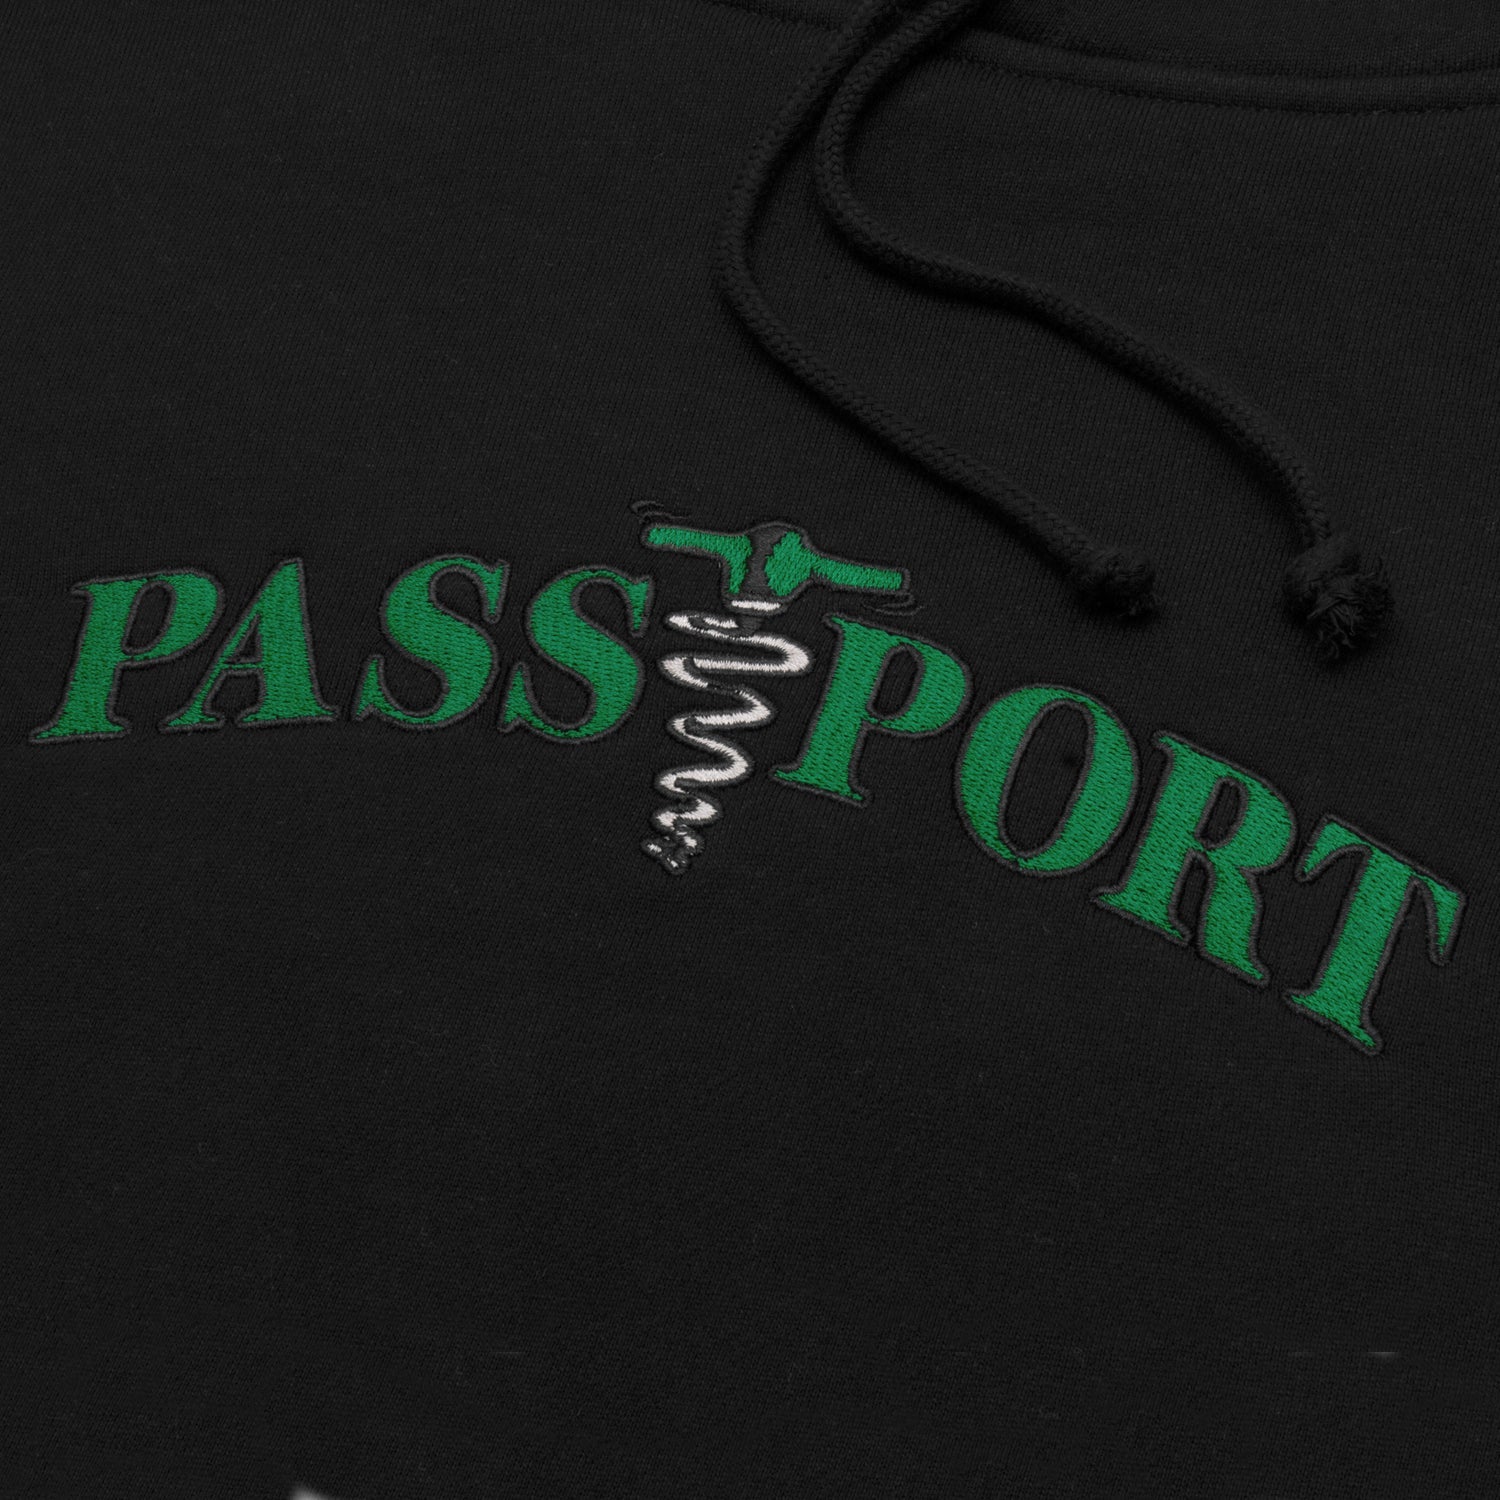 Pass~Port Corkscrew Embroidery Hoodie - Black